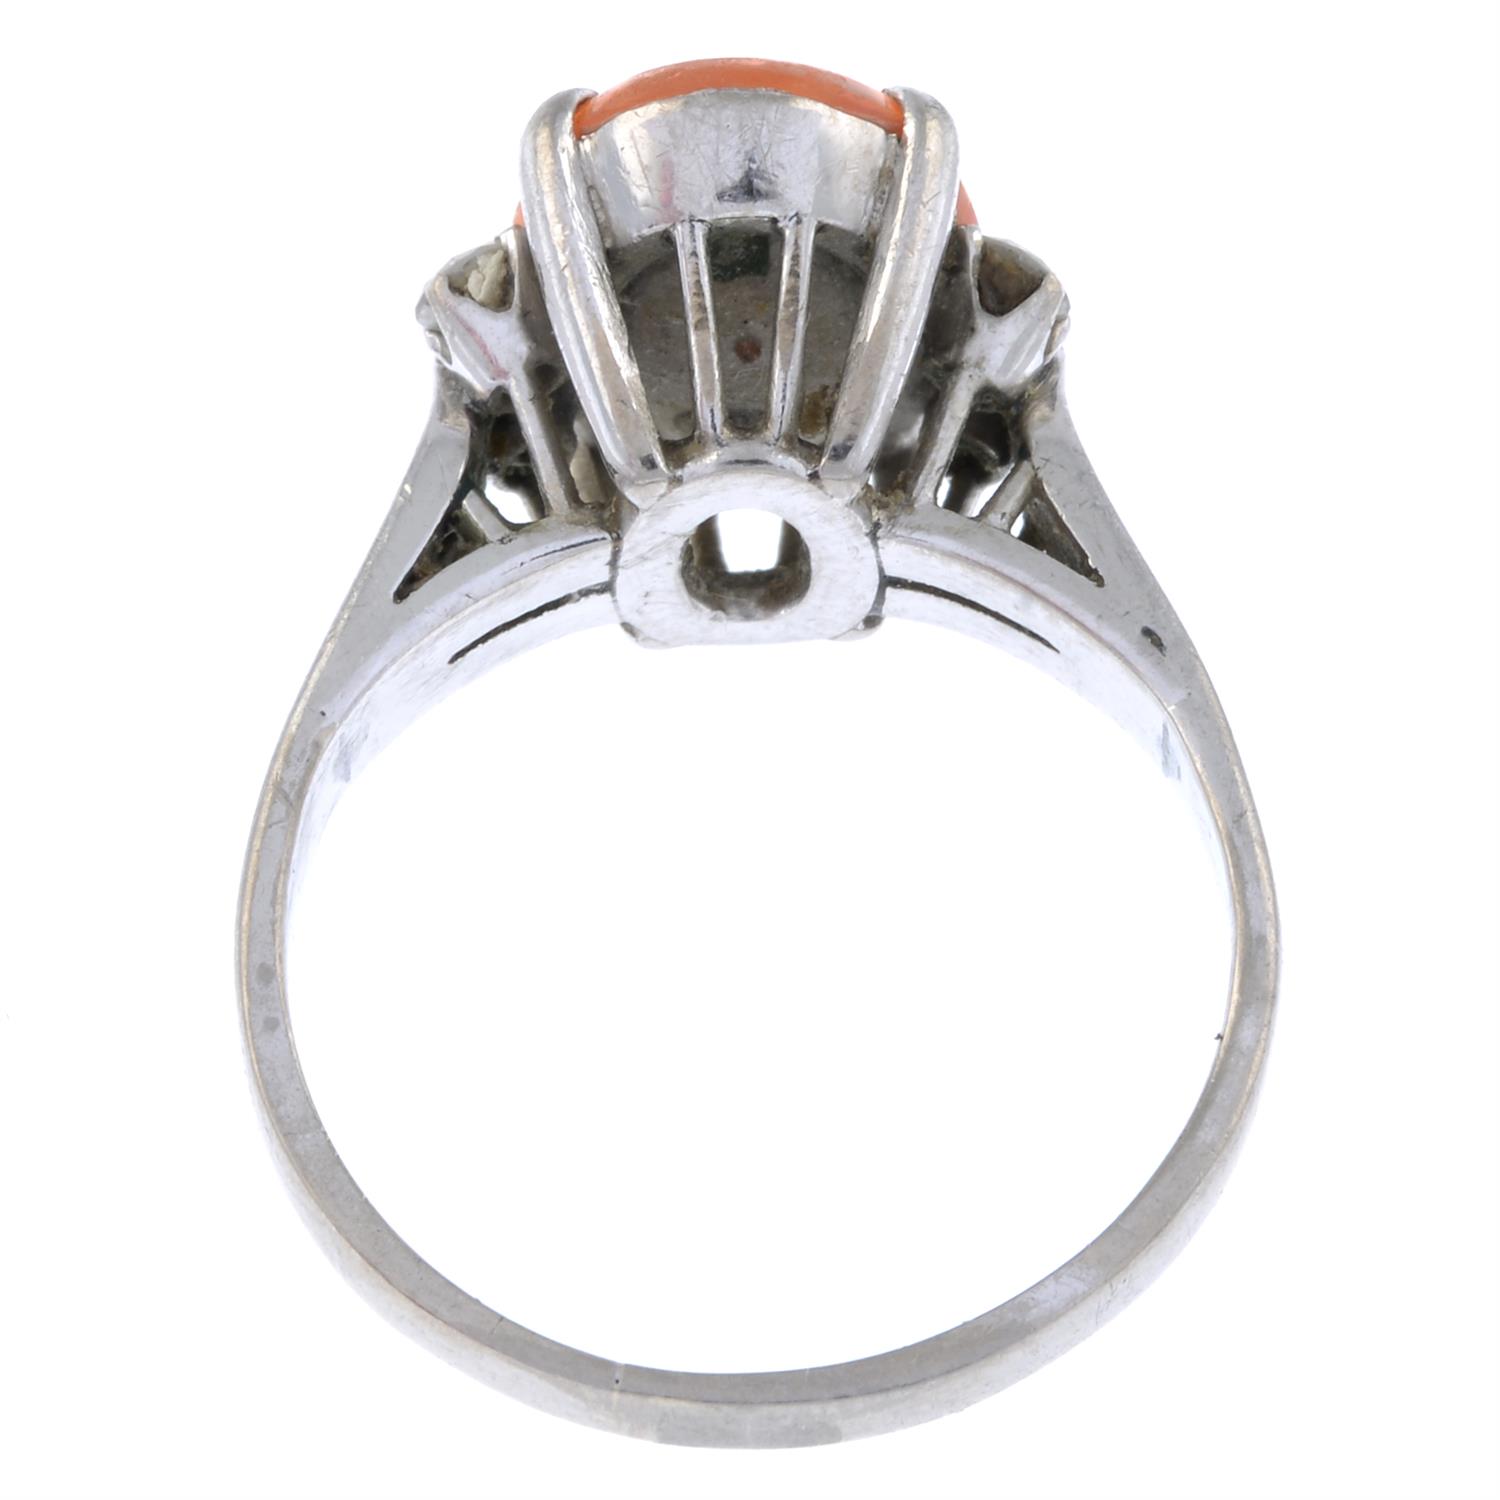 Fire opal & diamond dress ring - Image 2 of 2